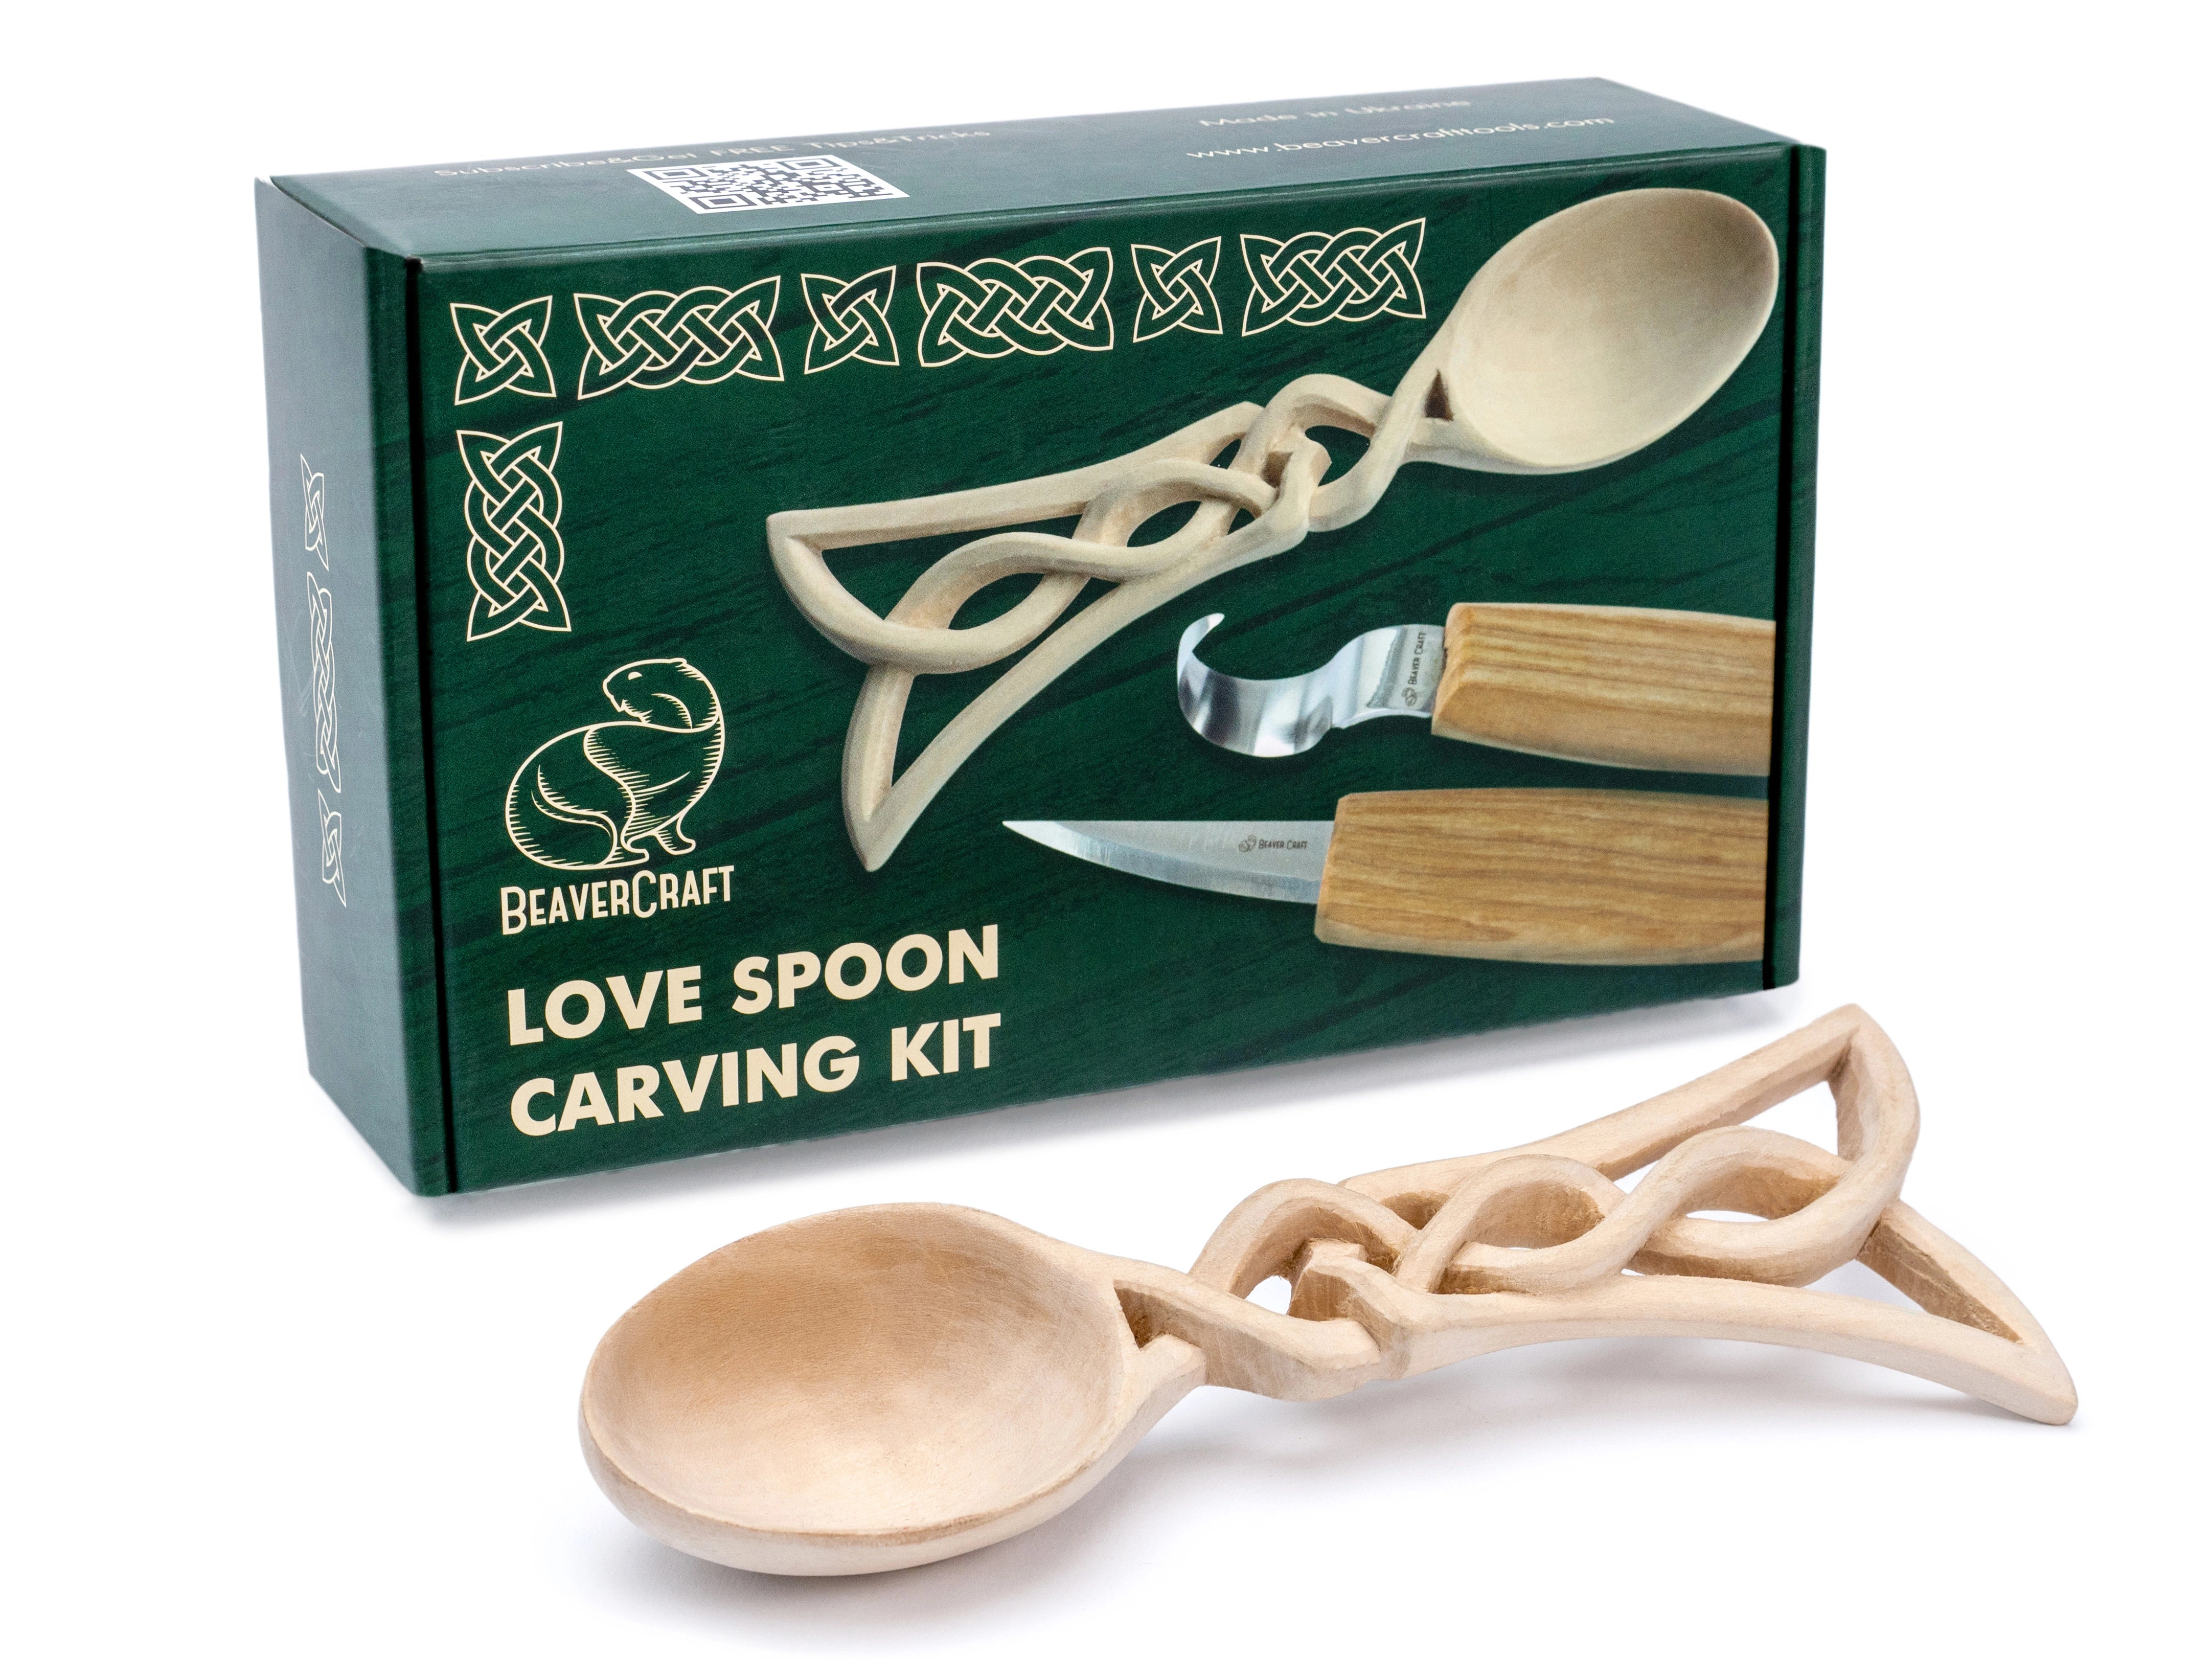 Wood Carving Kit